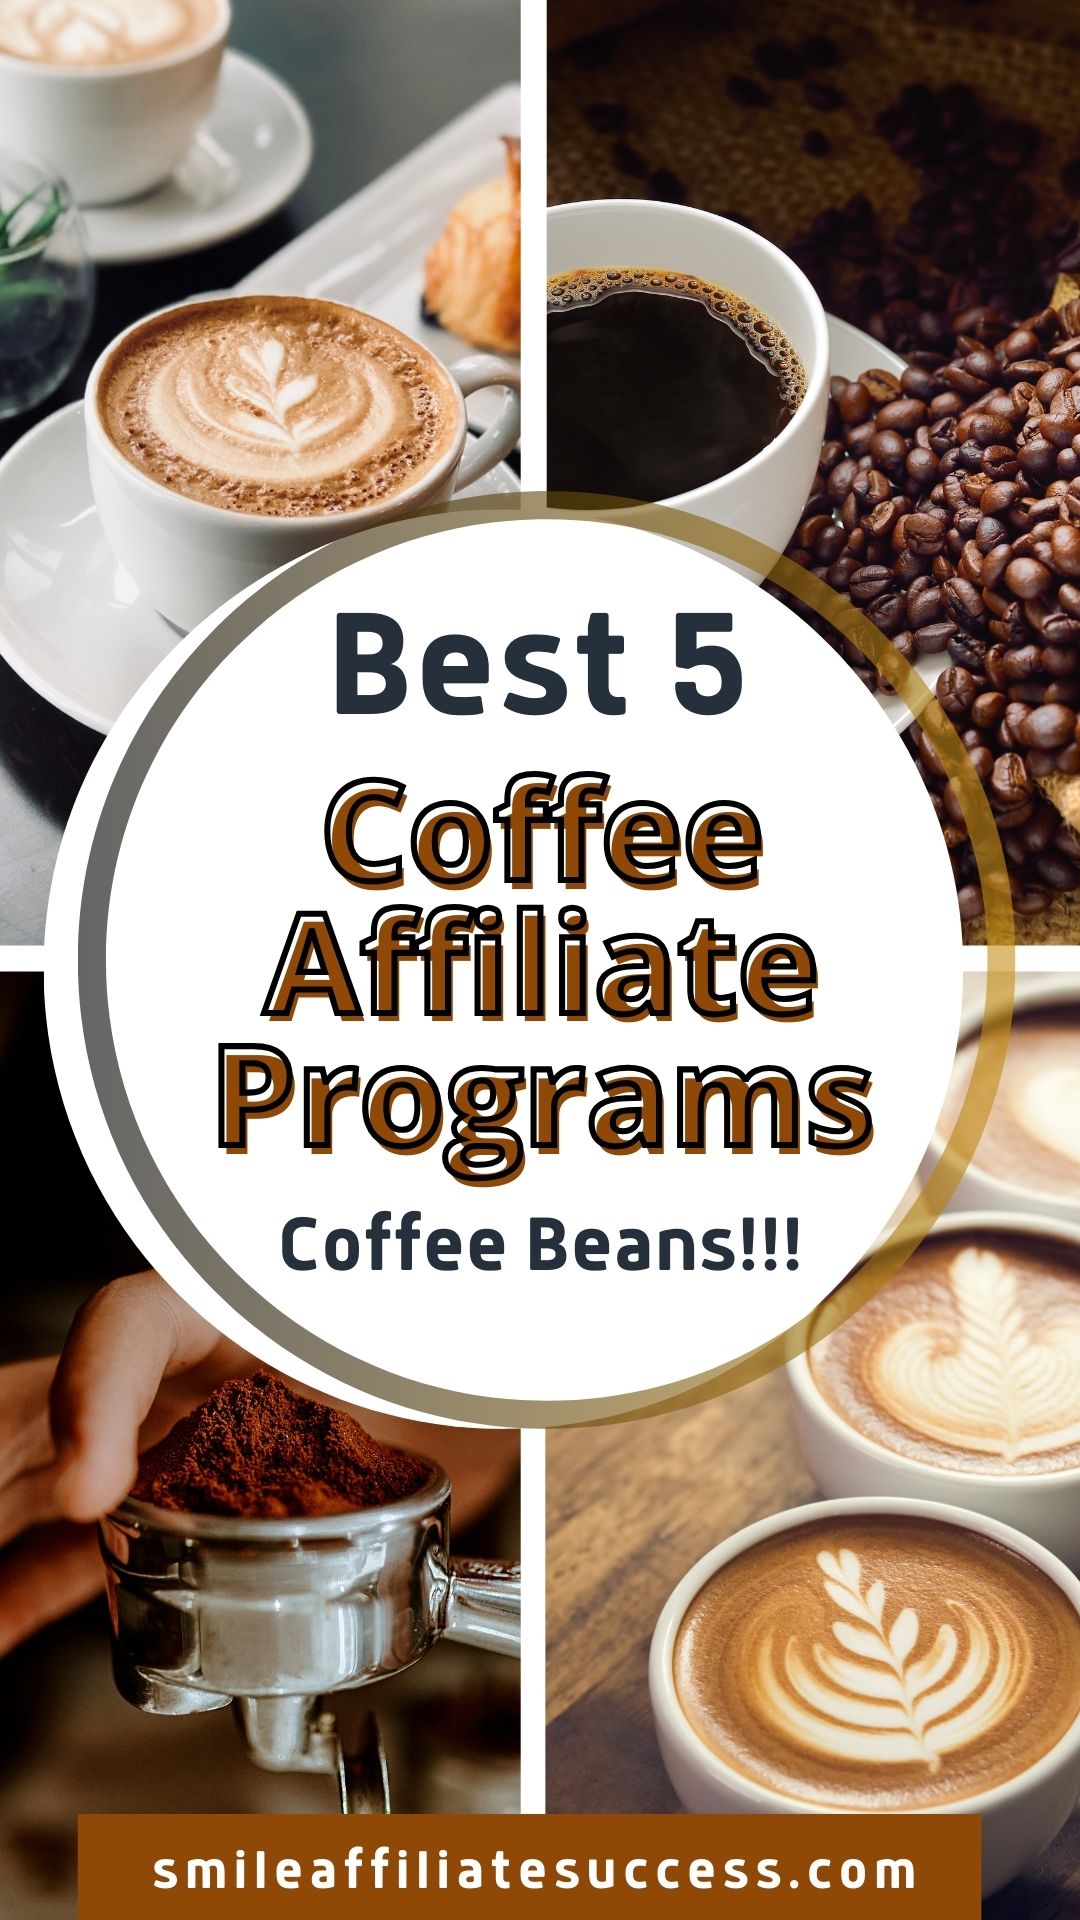 Best 5 Coffee Affiliate Programs